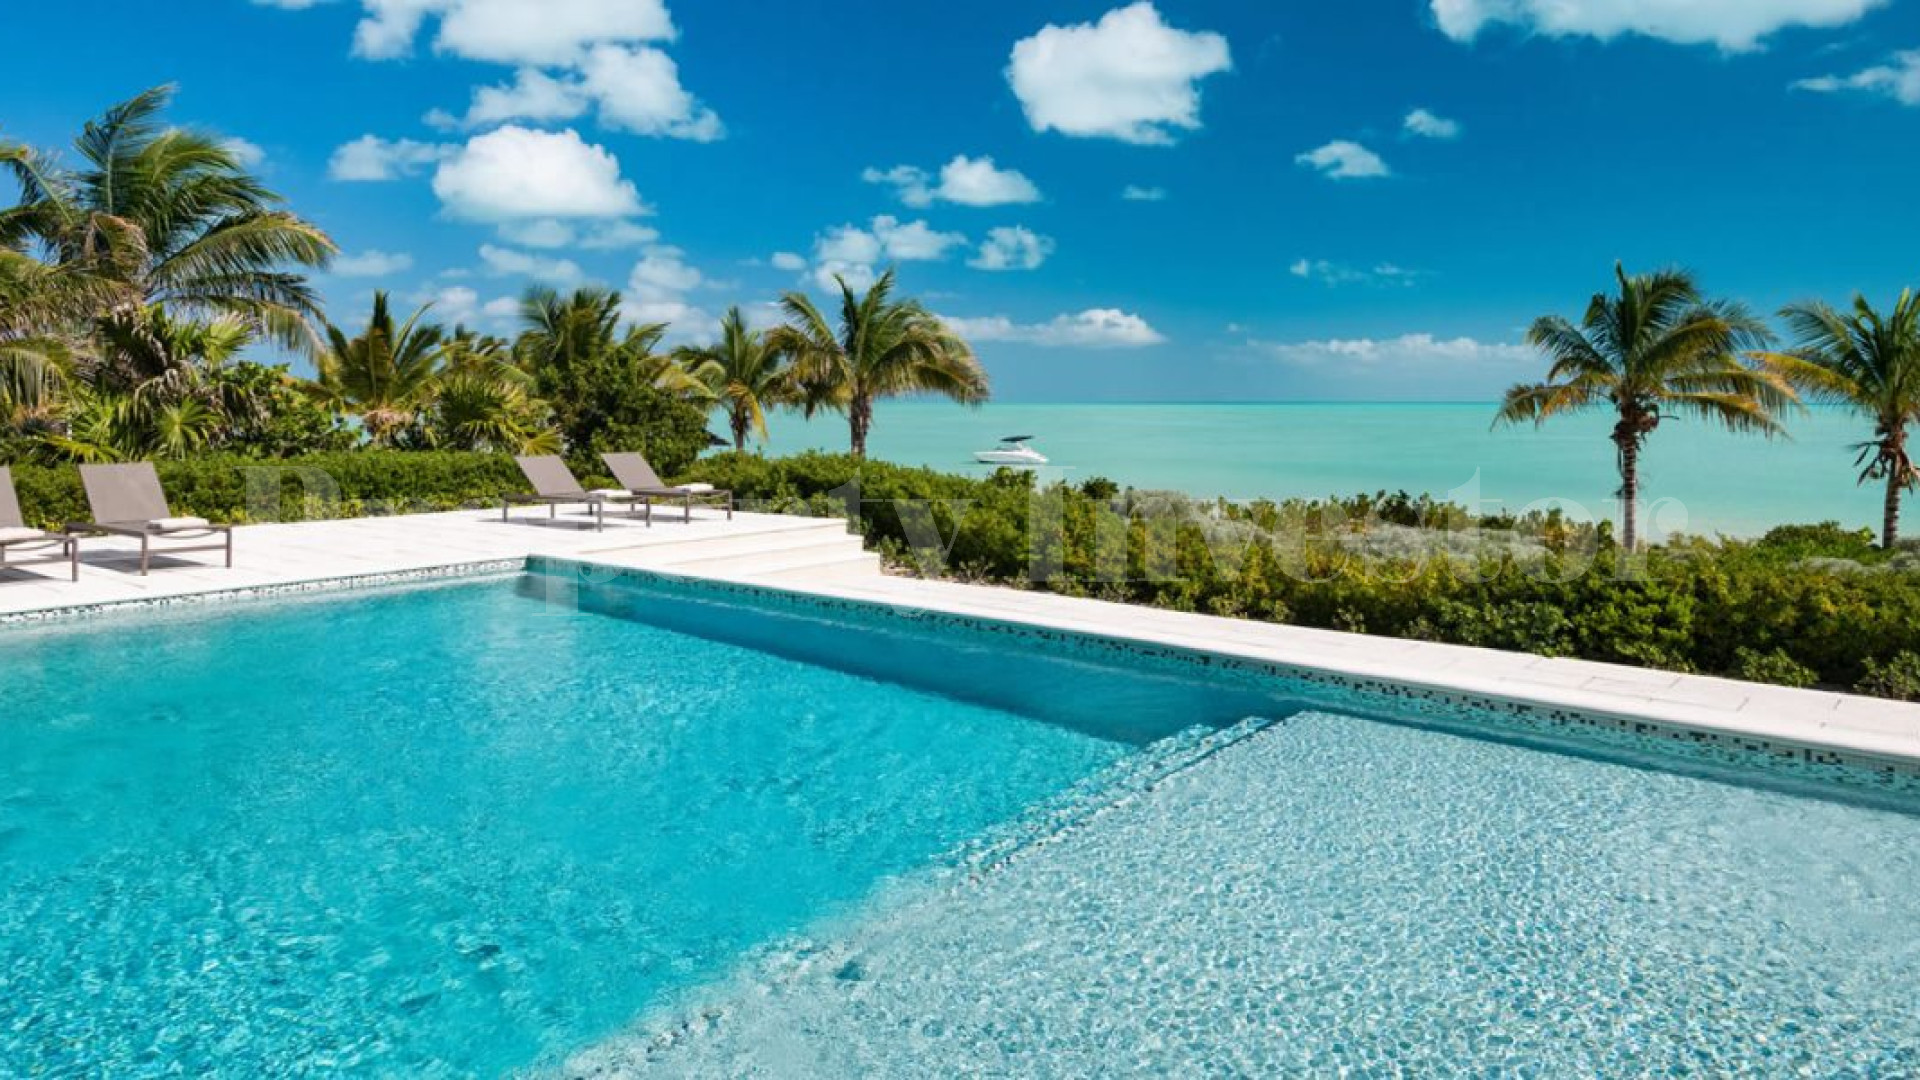 Exquisite 7 Bedroom Luxury Beachfront Home for Sale in Turks & Caicos